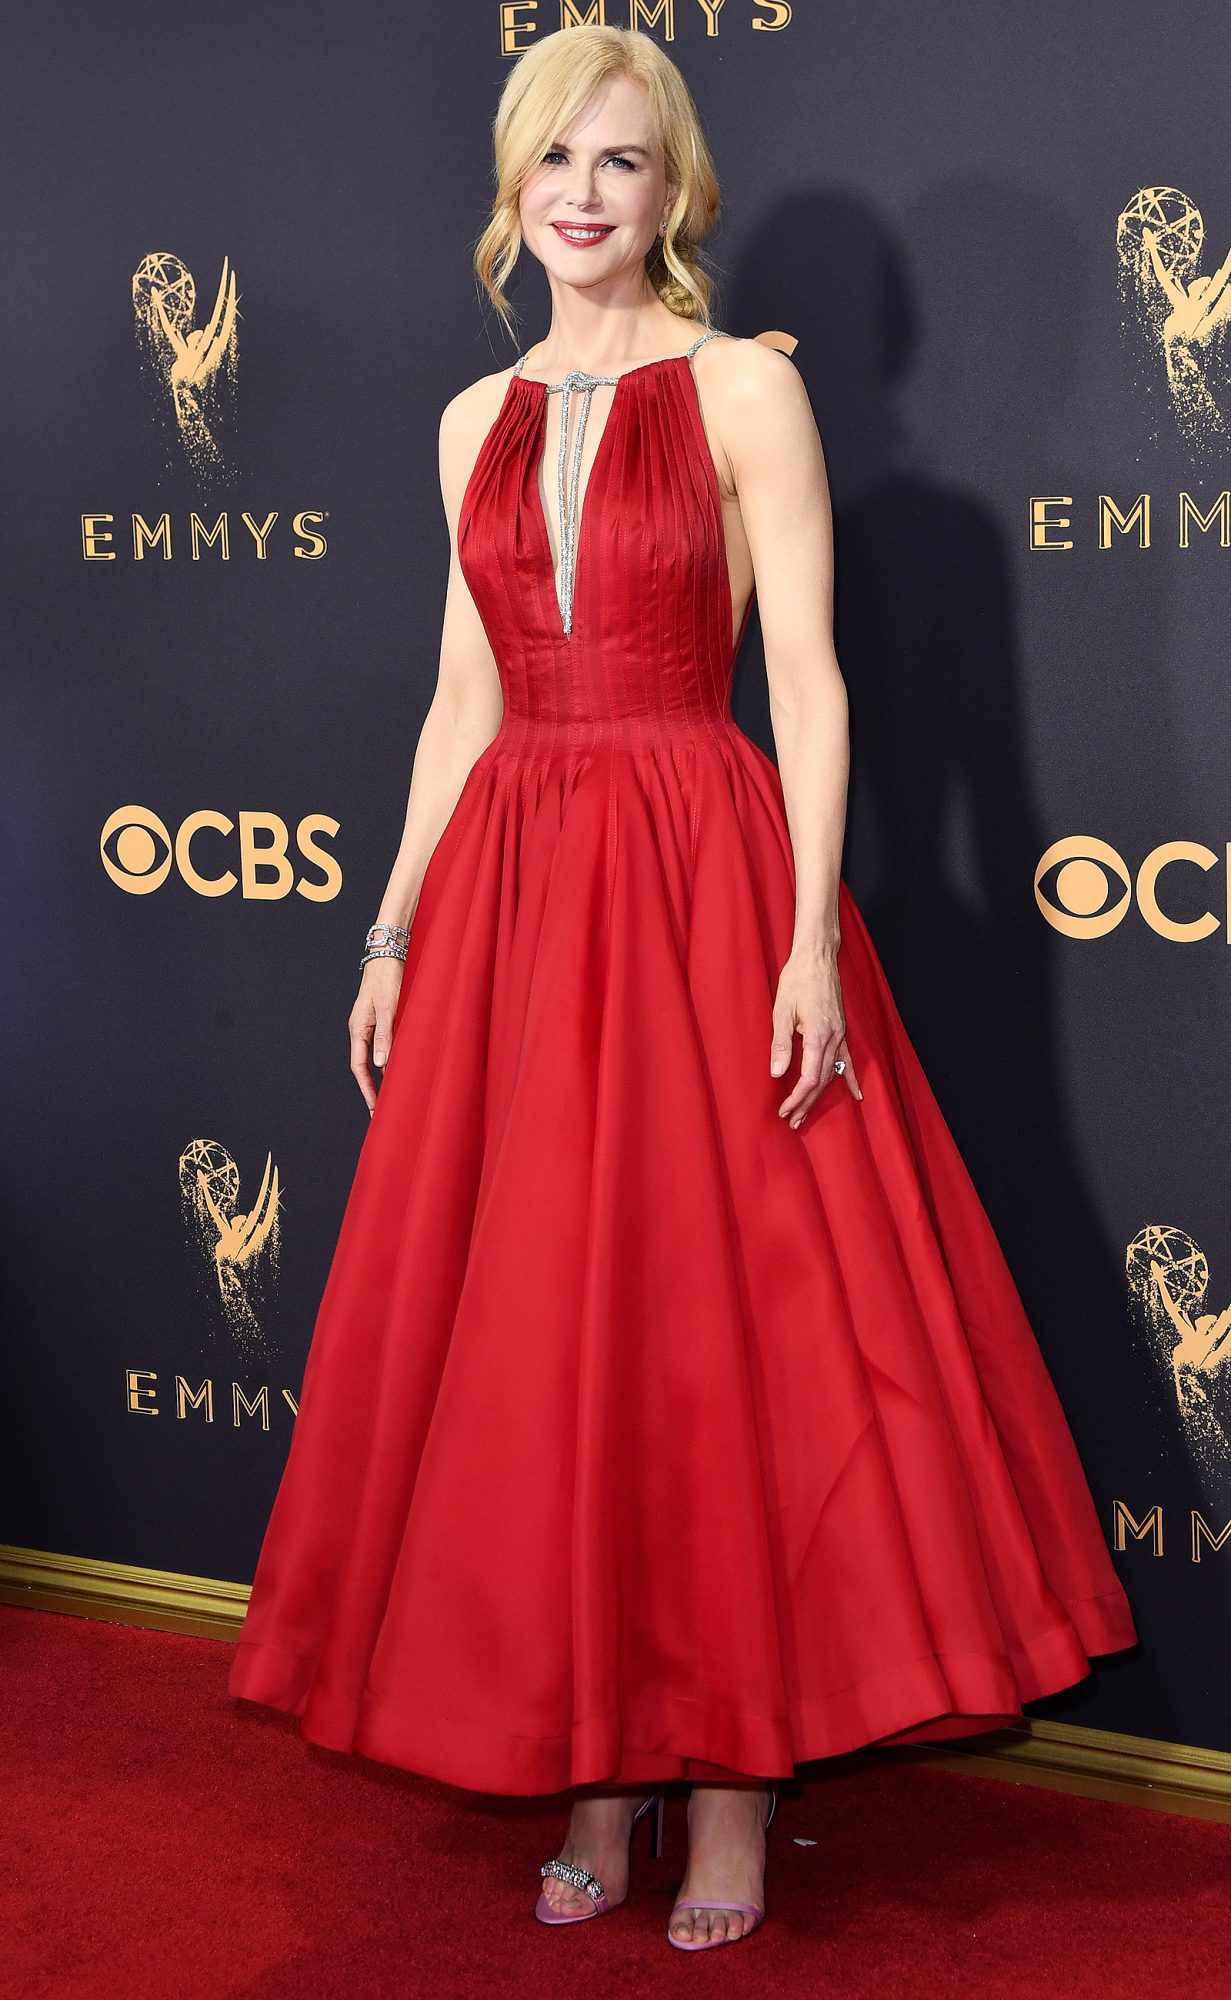 Emmys 2017 Best Dresses | PEOPLE.com